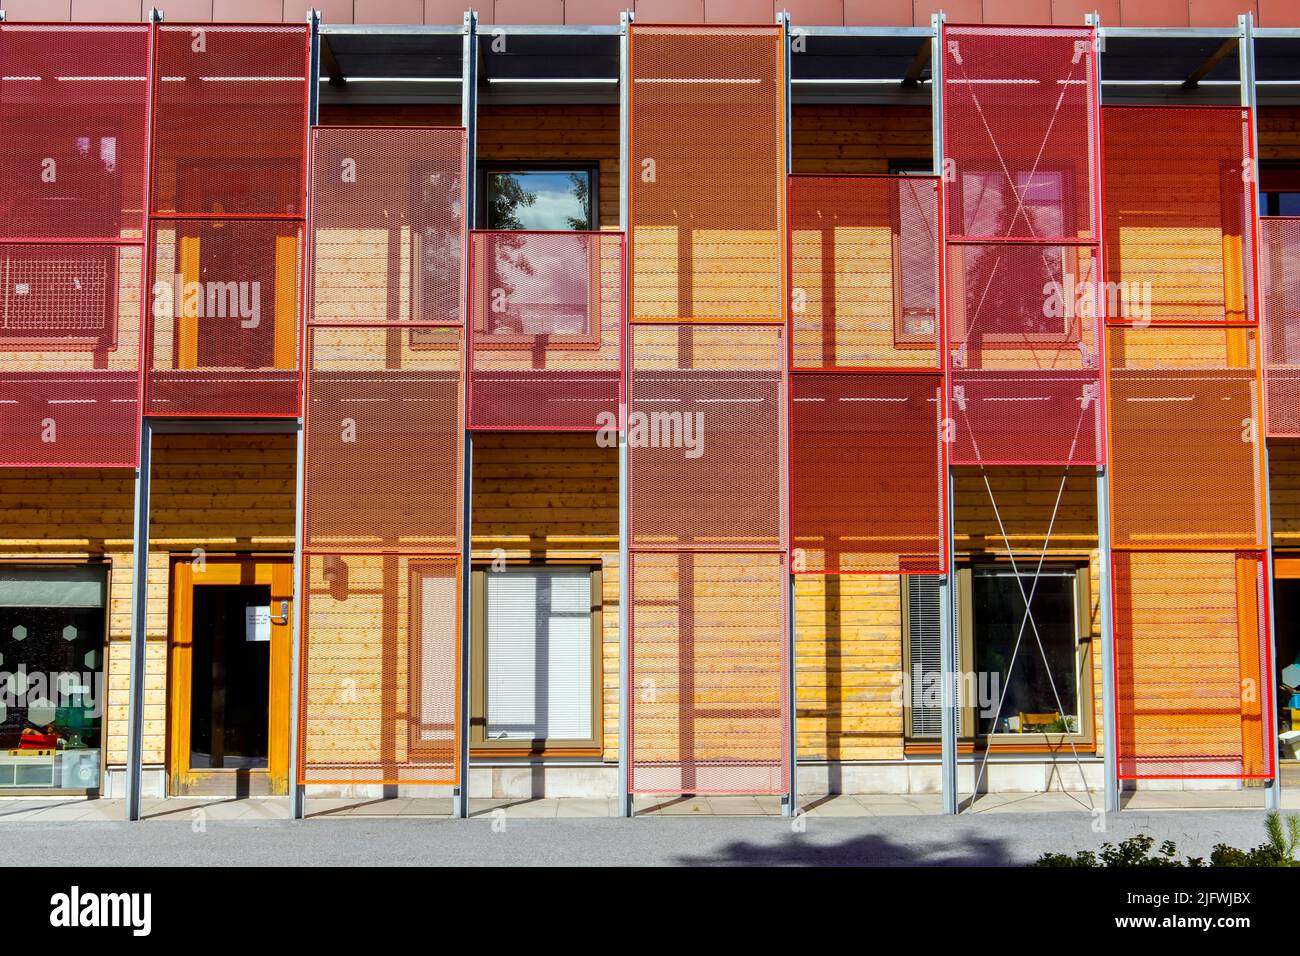 Colorful elementary school building in Ursvik (Ursvikskolan) in Sundbyberg, Sweden. Designed by Marge Architects. Stock Photo